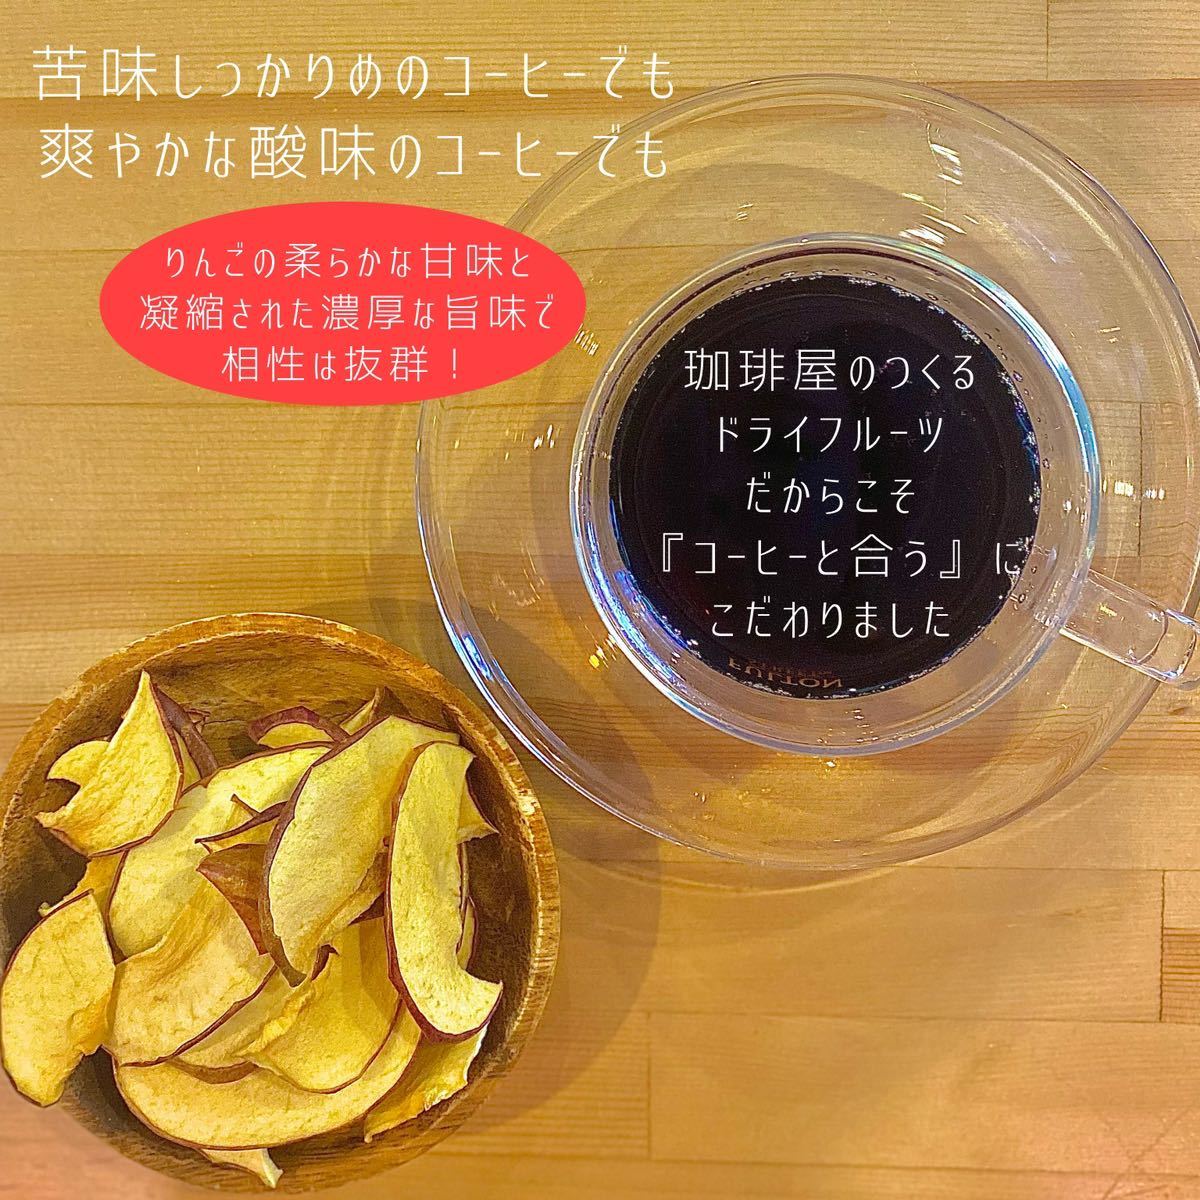 [3 sack ] Aomori prefecture production apple chip s sun ..120g no addition dried fruit dry apple apple chip s sugar un- use 